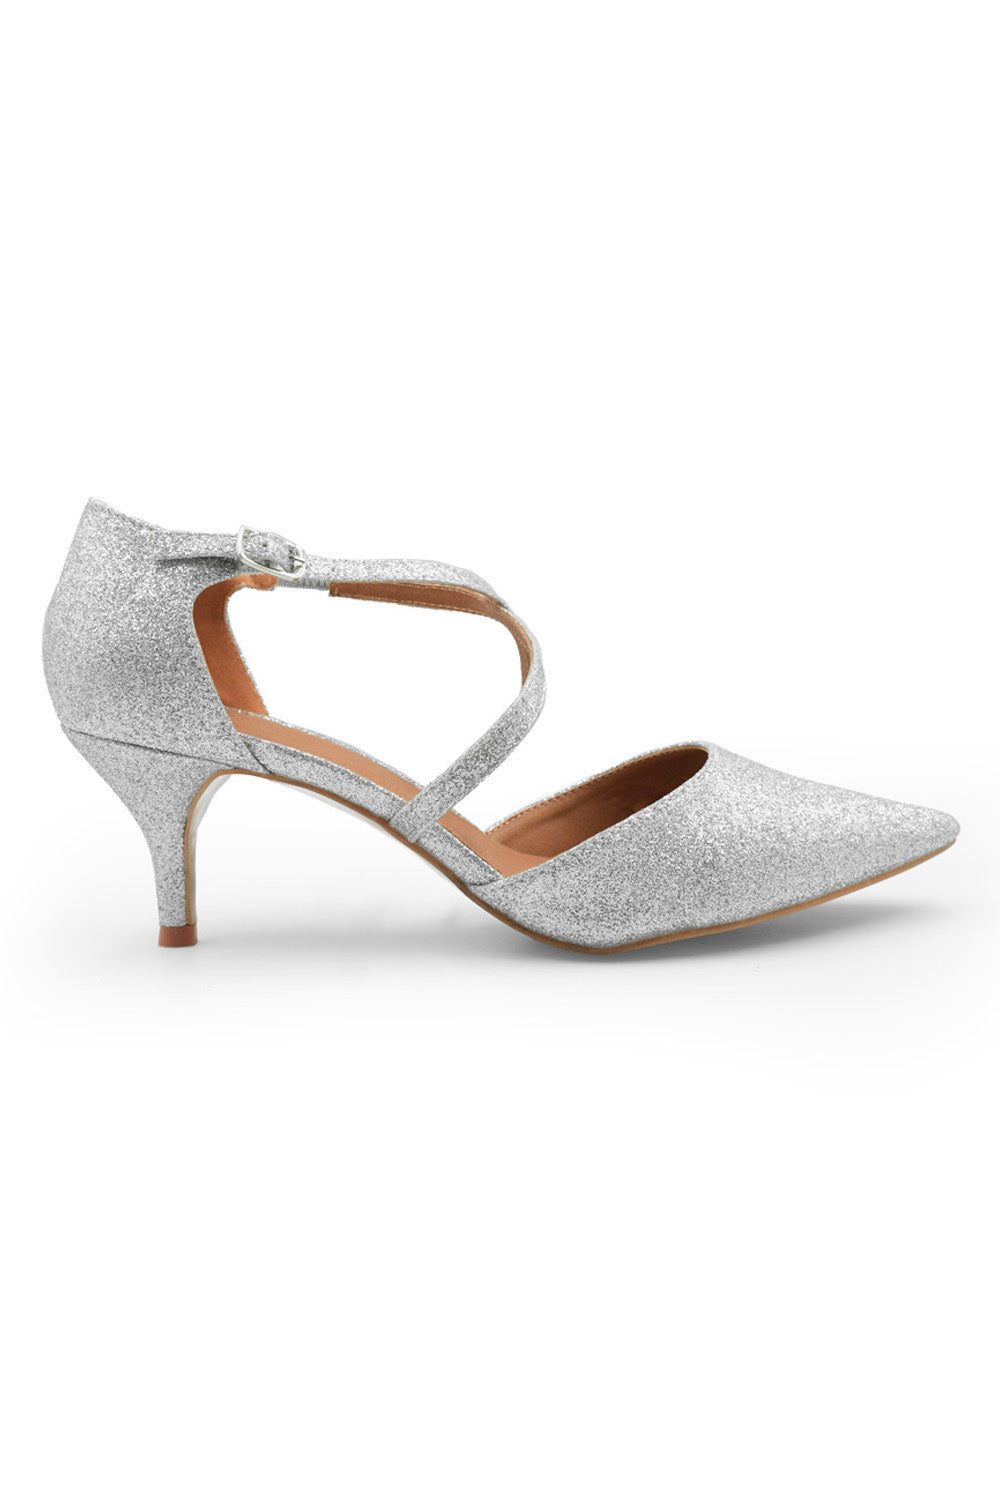 Amazon.com | MAIERNISI JESSI Women's Classic Kitten Heel Pumps Pointed Toe  Slip On Dress Shoes Glitter Silver 36 - US 6 | Pumps